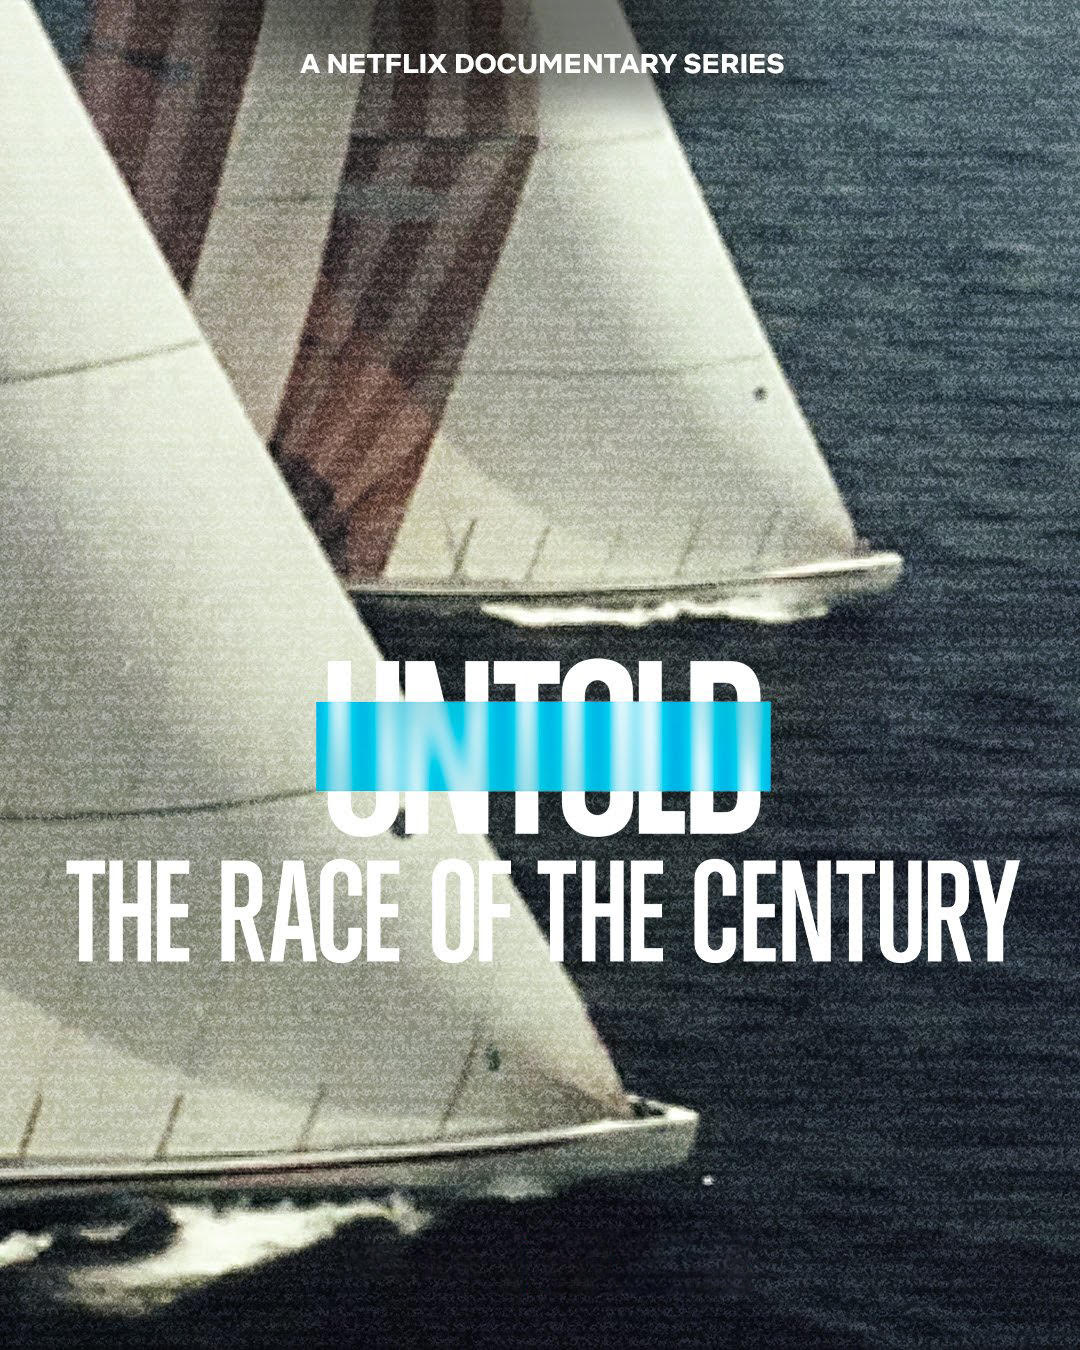 Race of the century